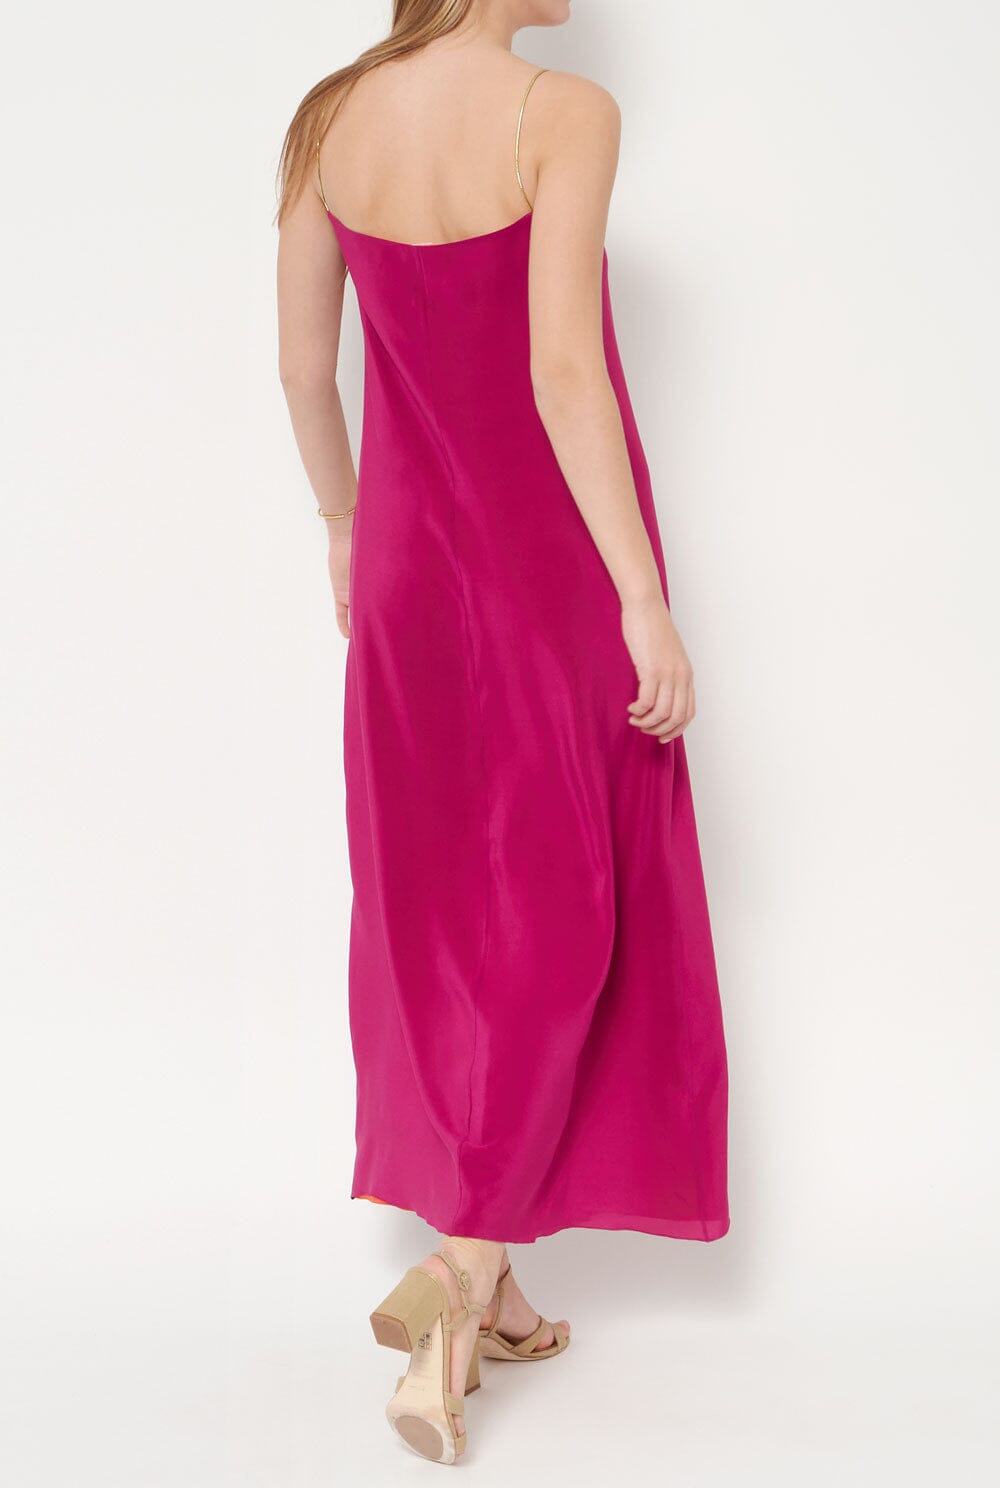 Flor Reversible Extra Long Dress bougainvillea/orange Dresses Atelier Aletheia 